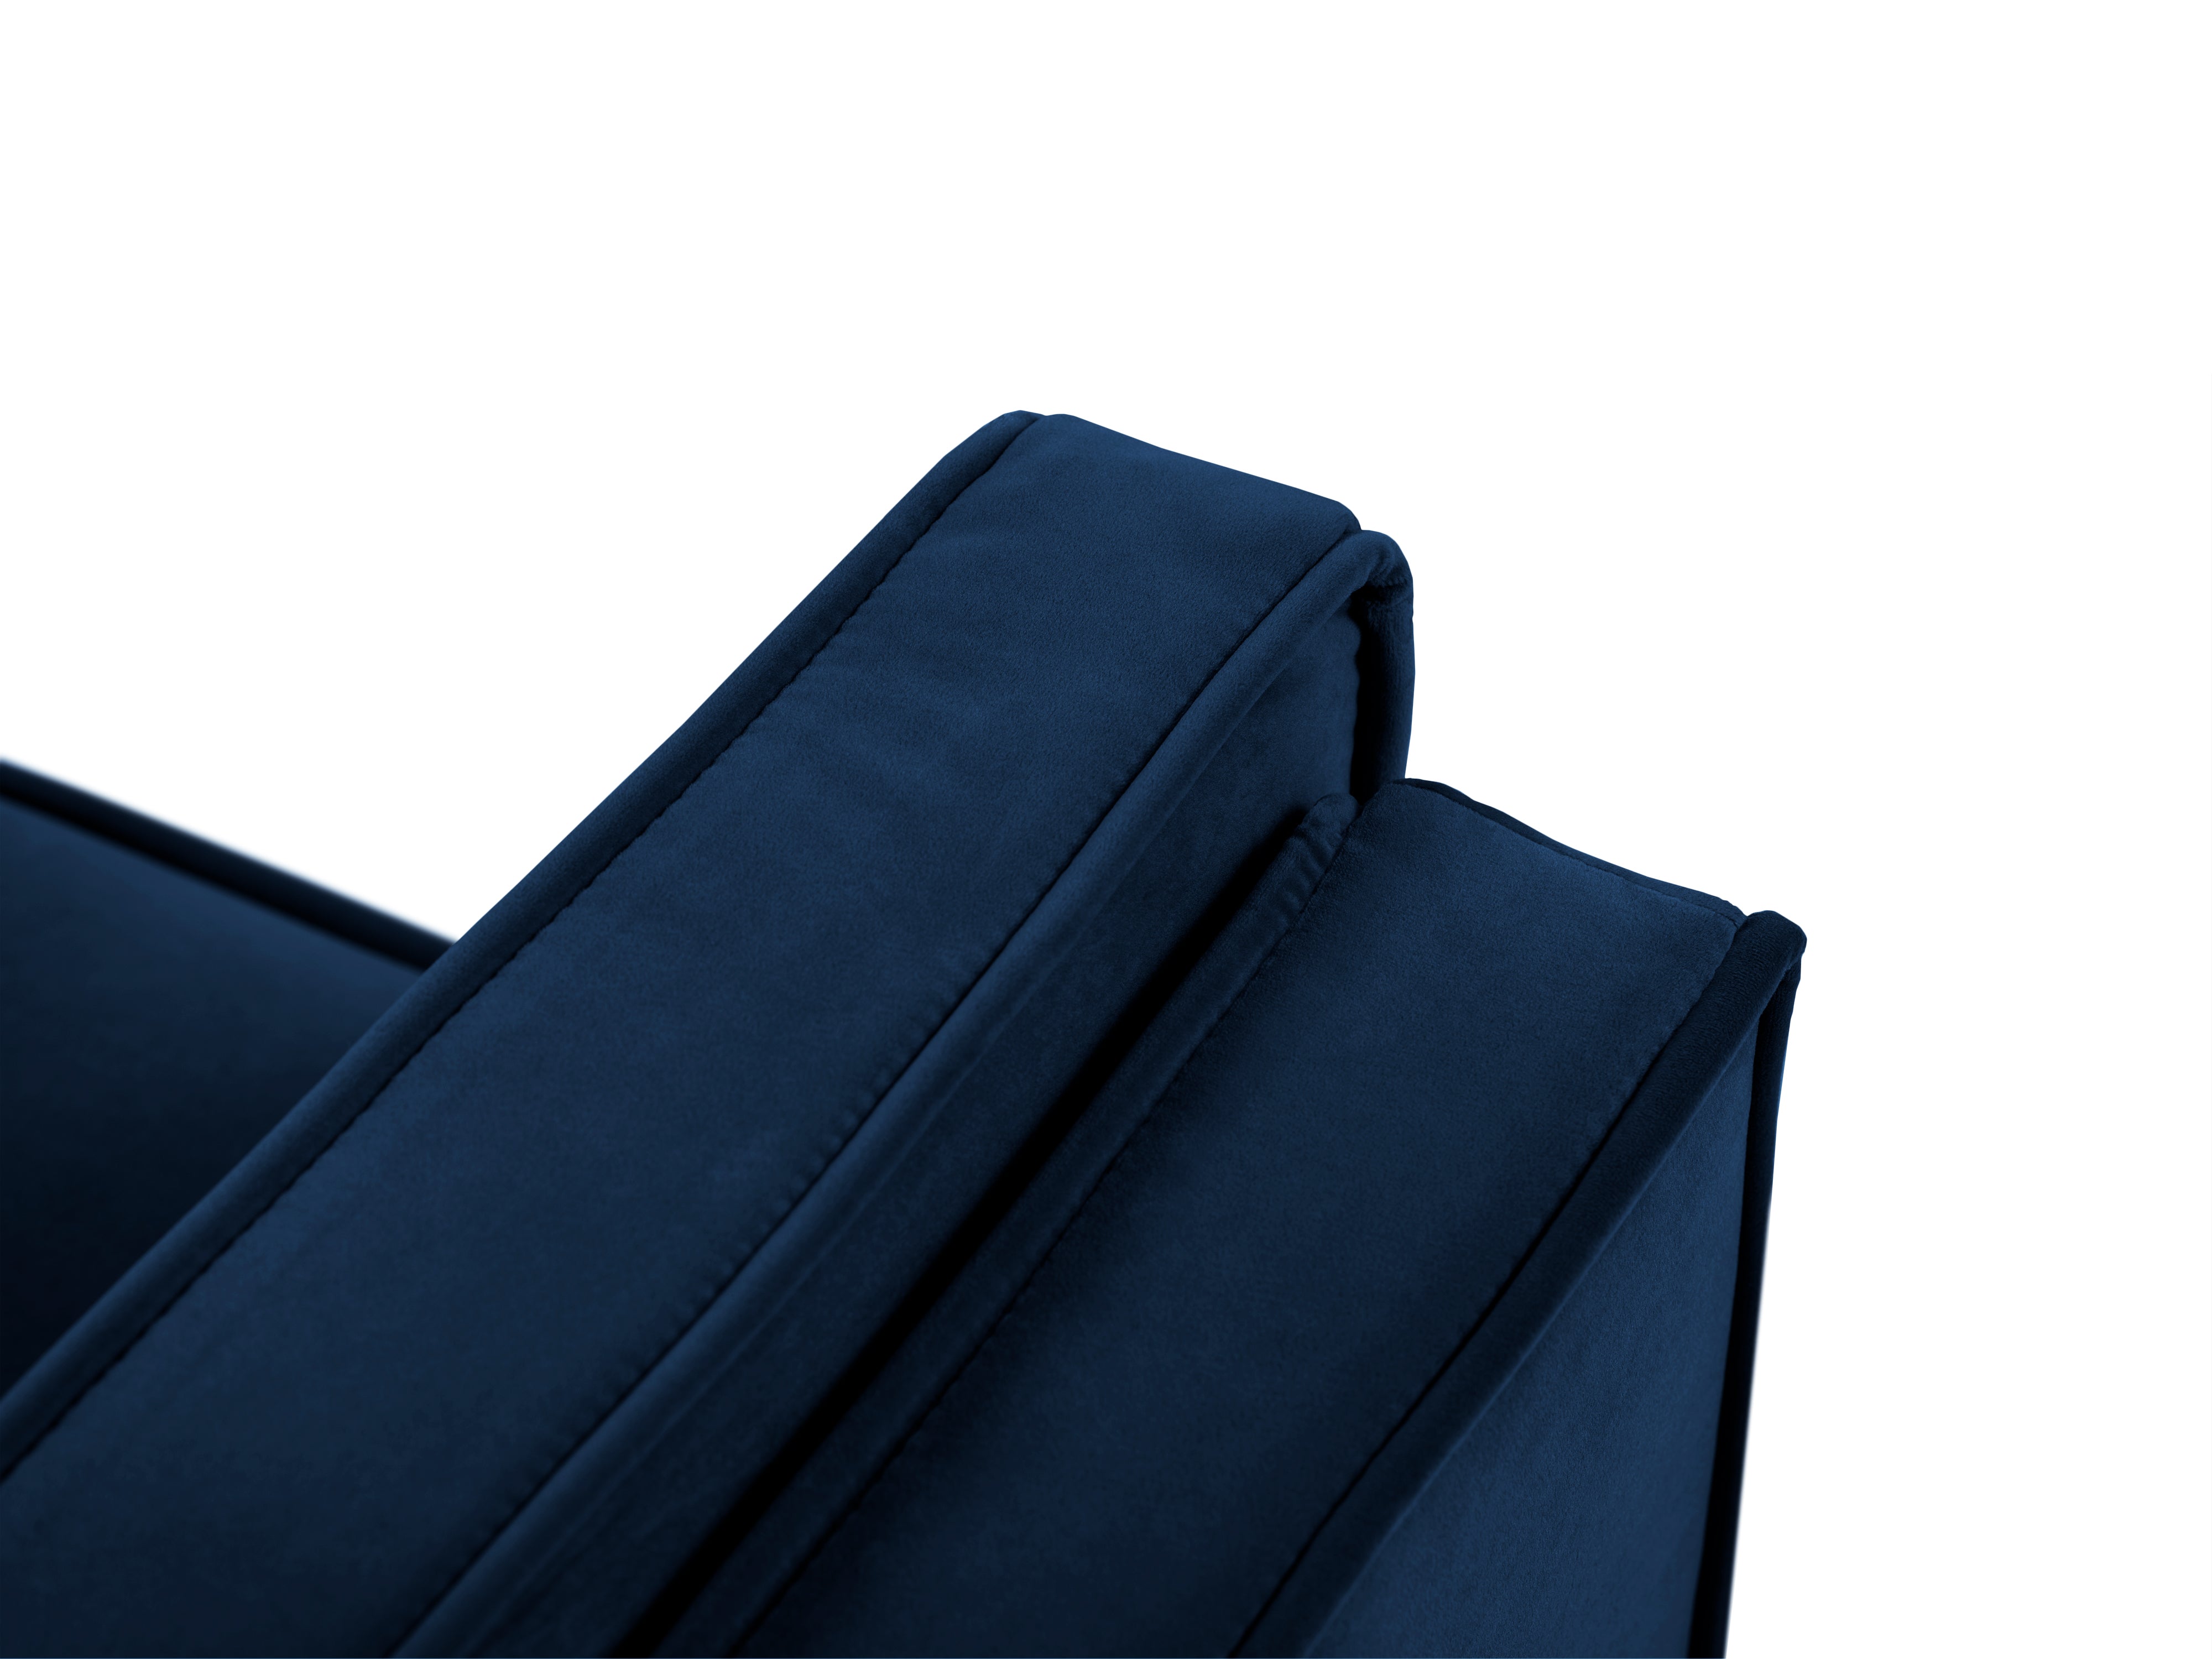 LUIS royal blue velvet 2-seater sofa with black base